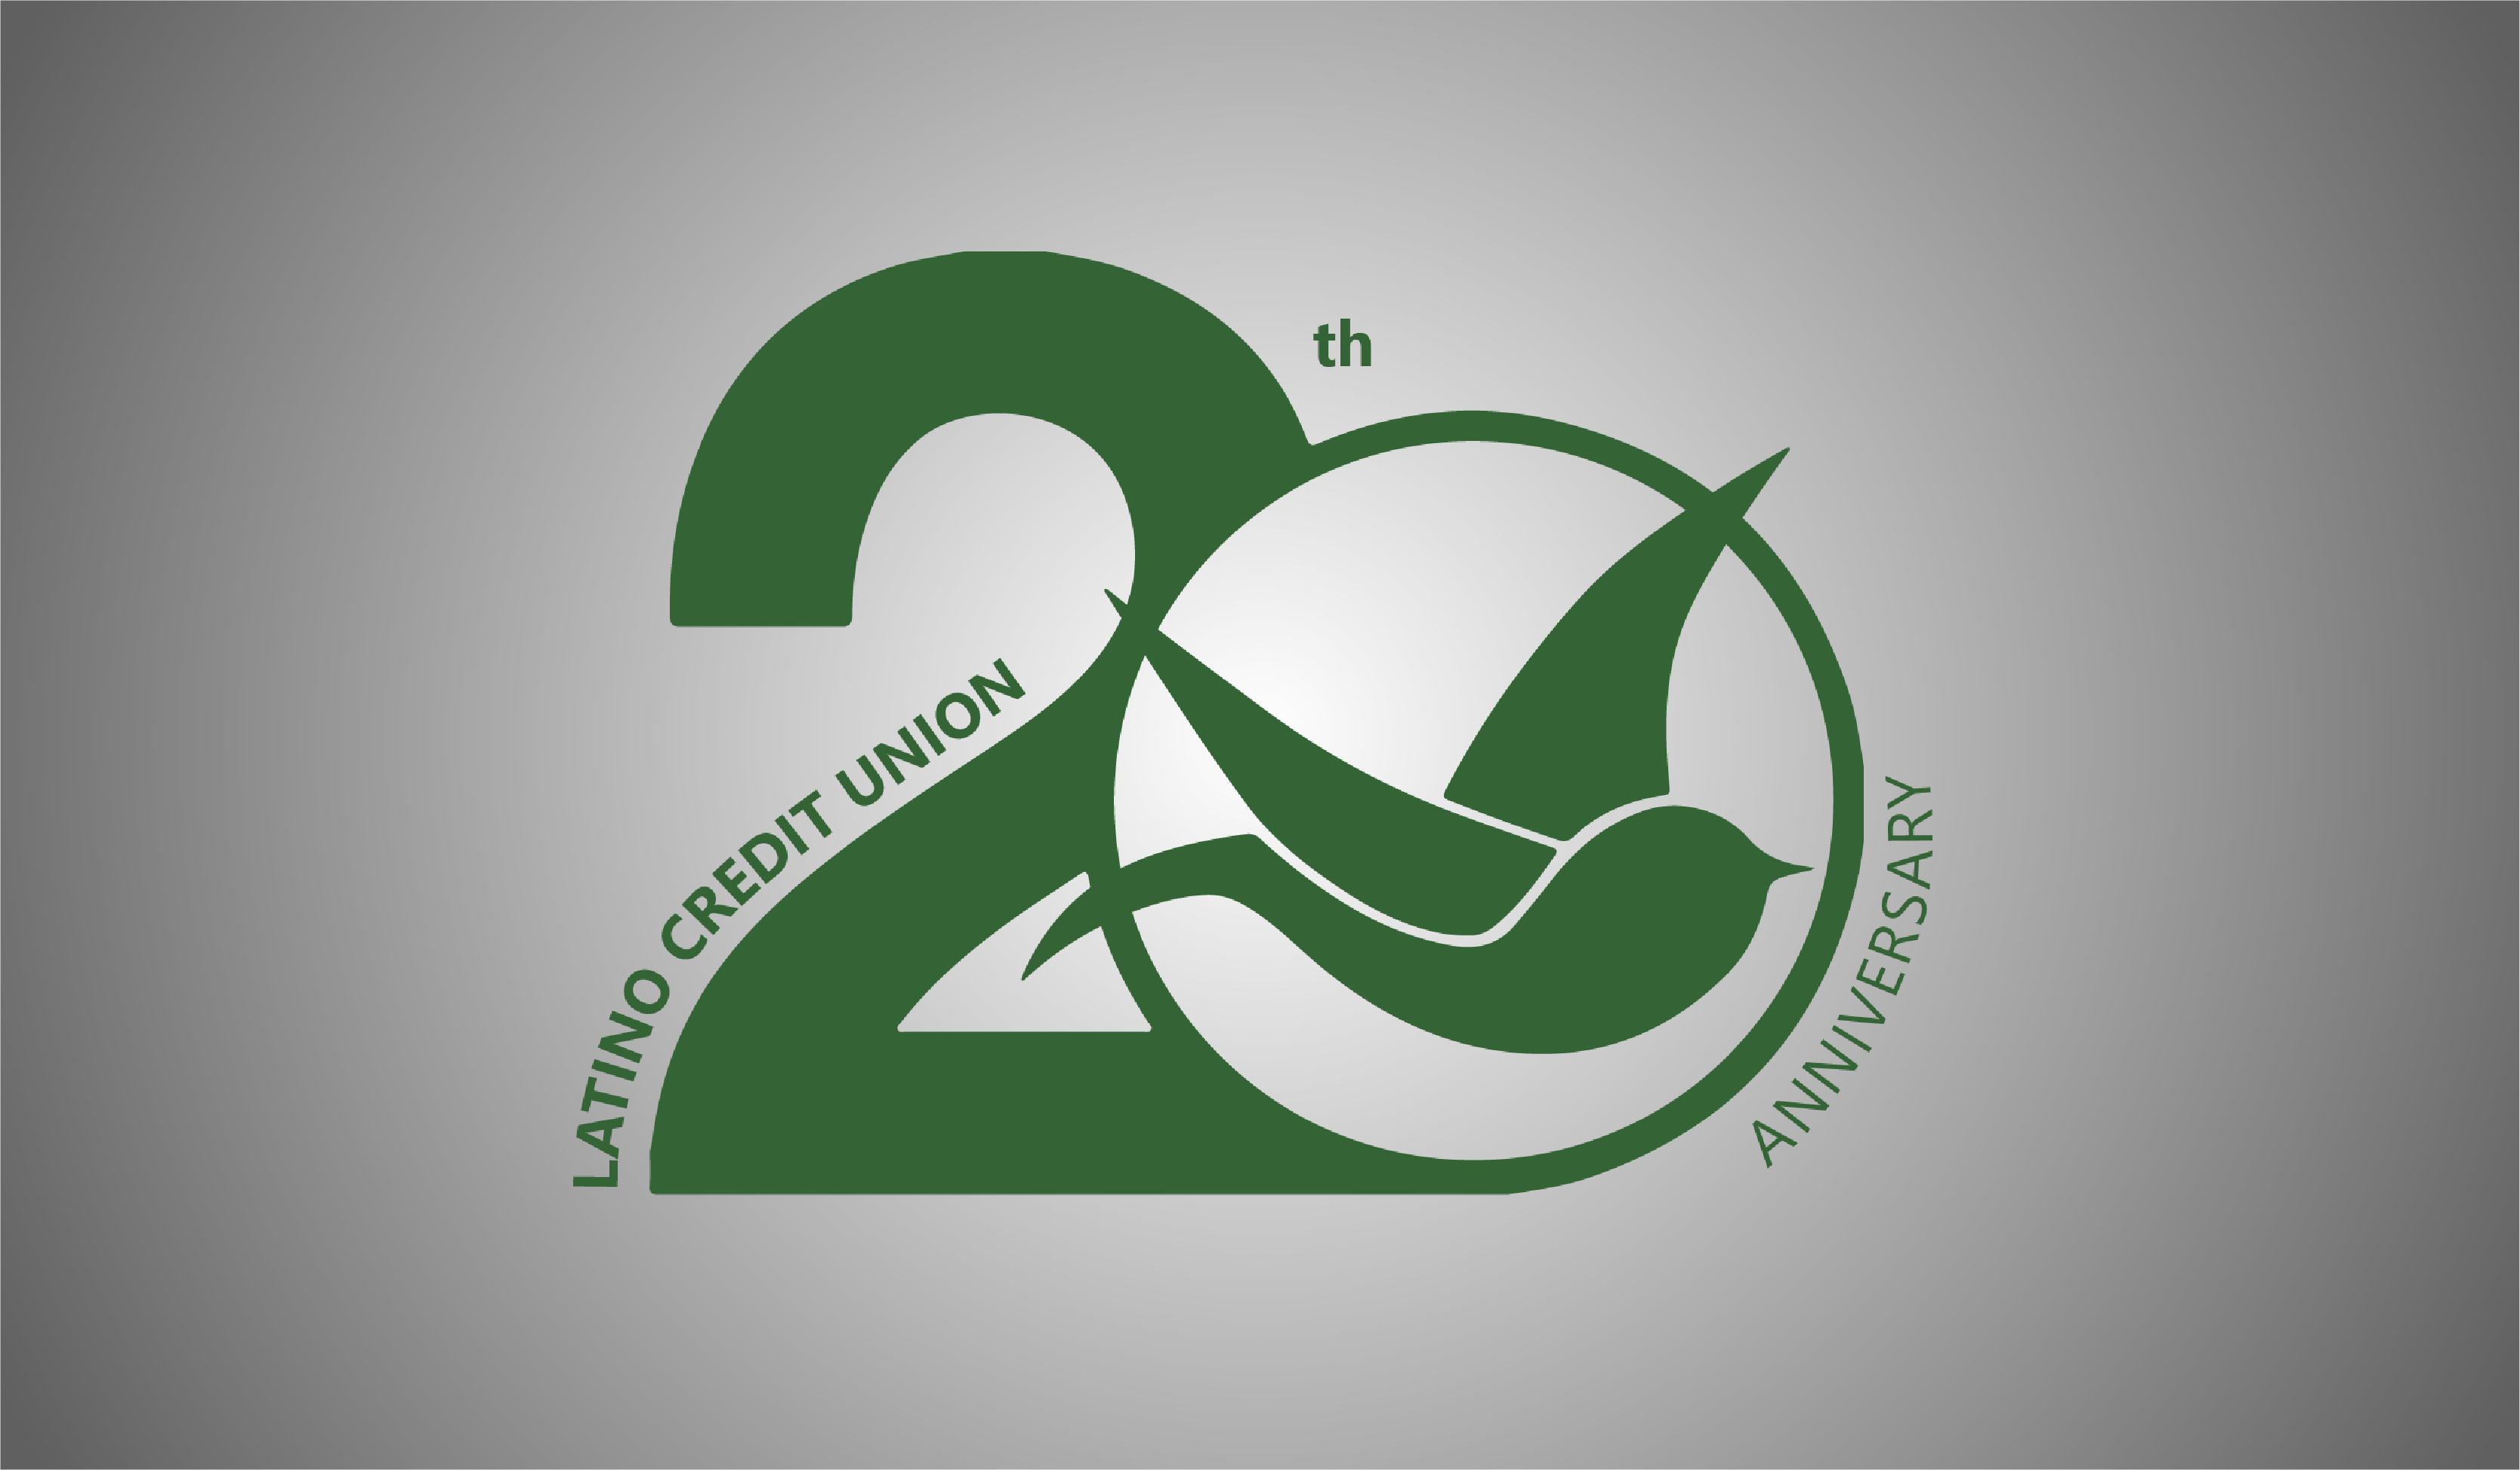 Lccu 20th anniversary logo